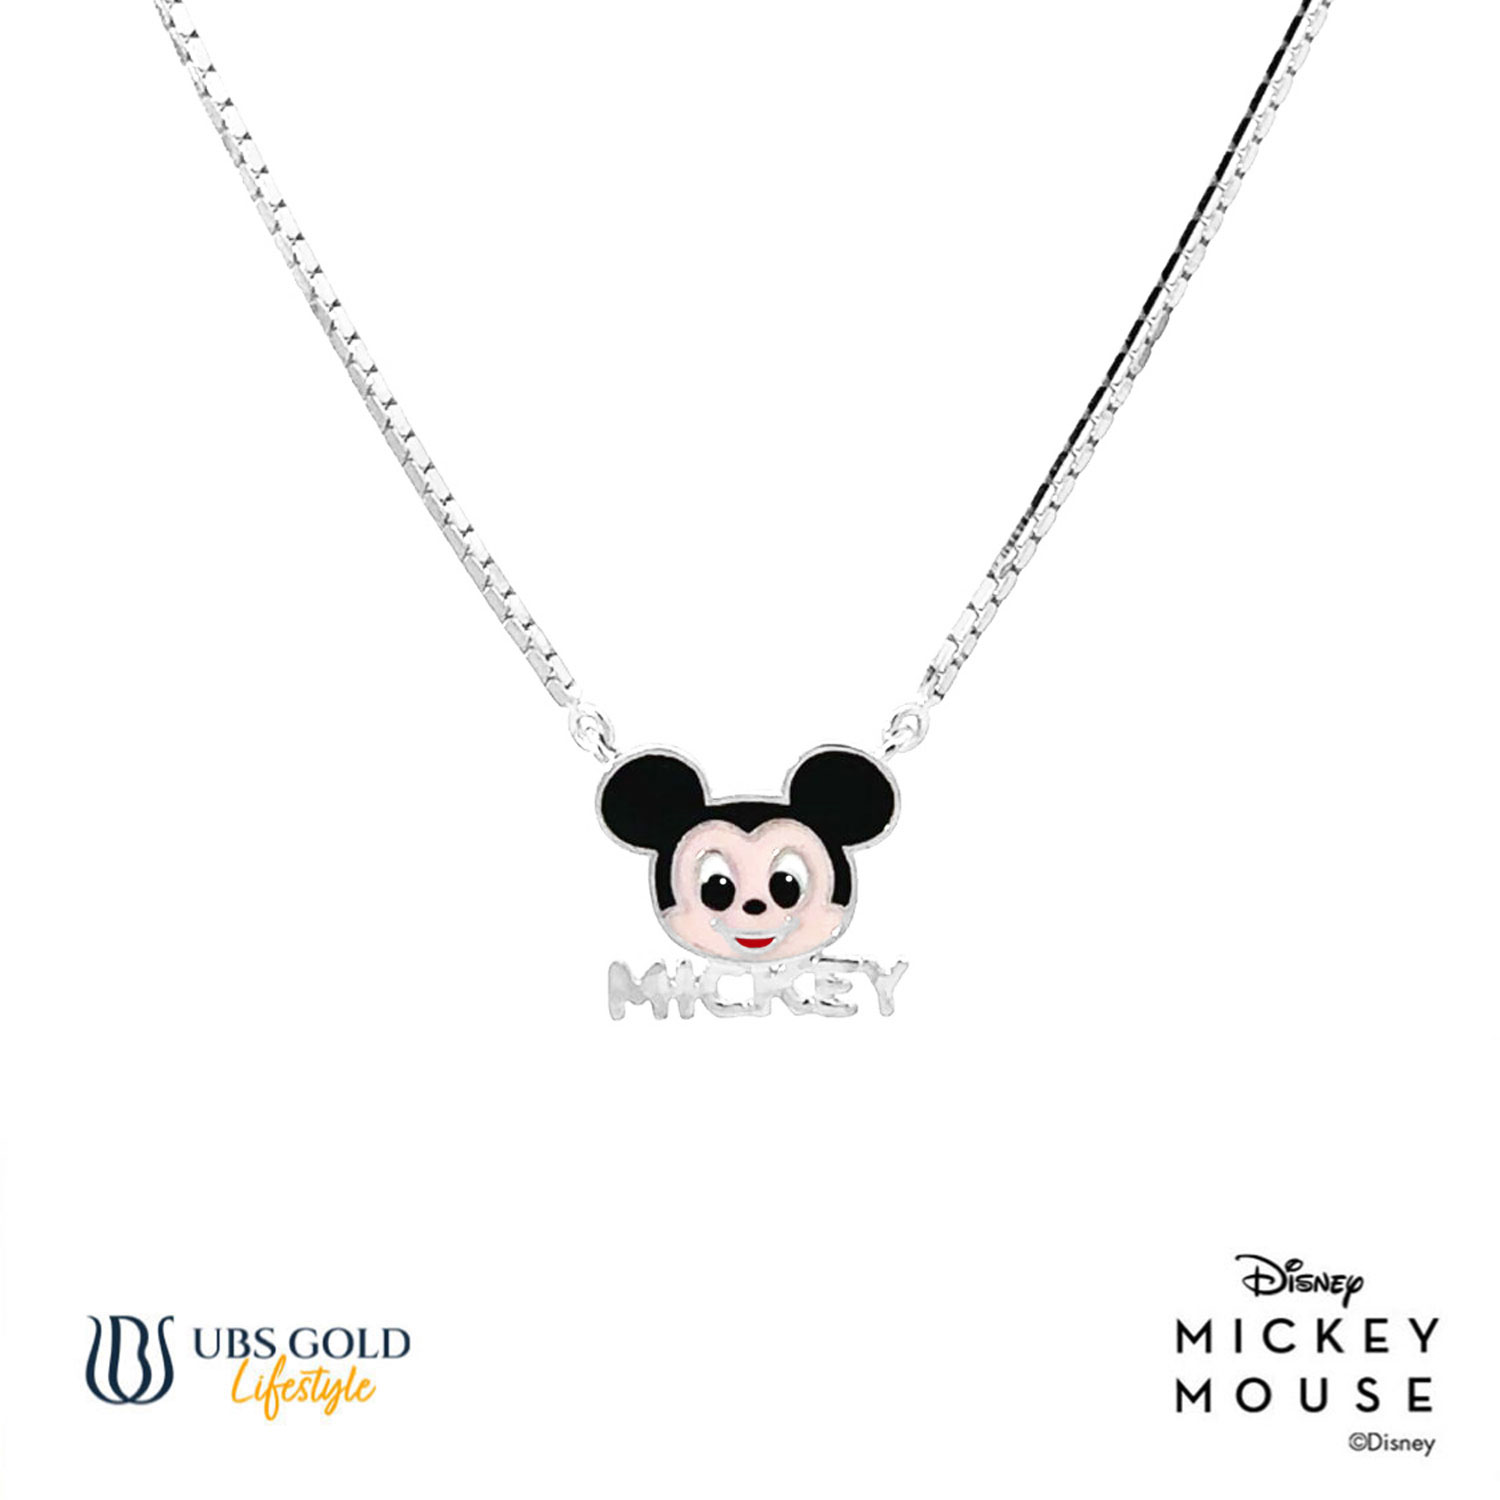 UBS Kalung Emas Anak Disney Mickey Mouse - Kky0443 - 17K